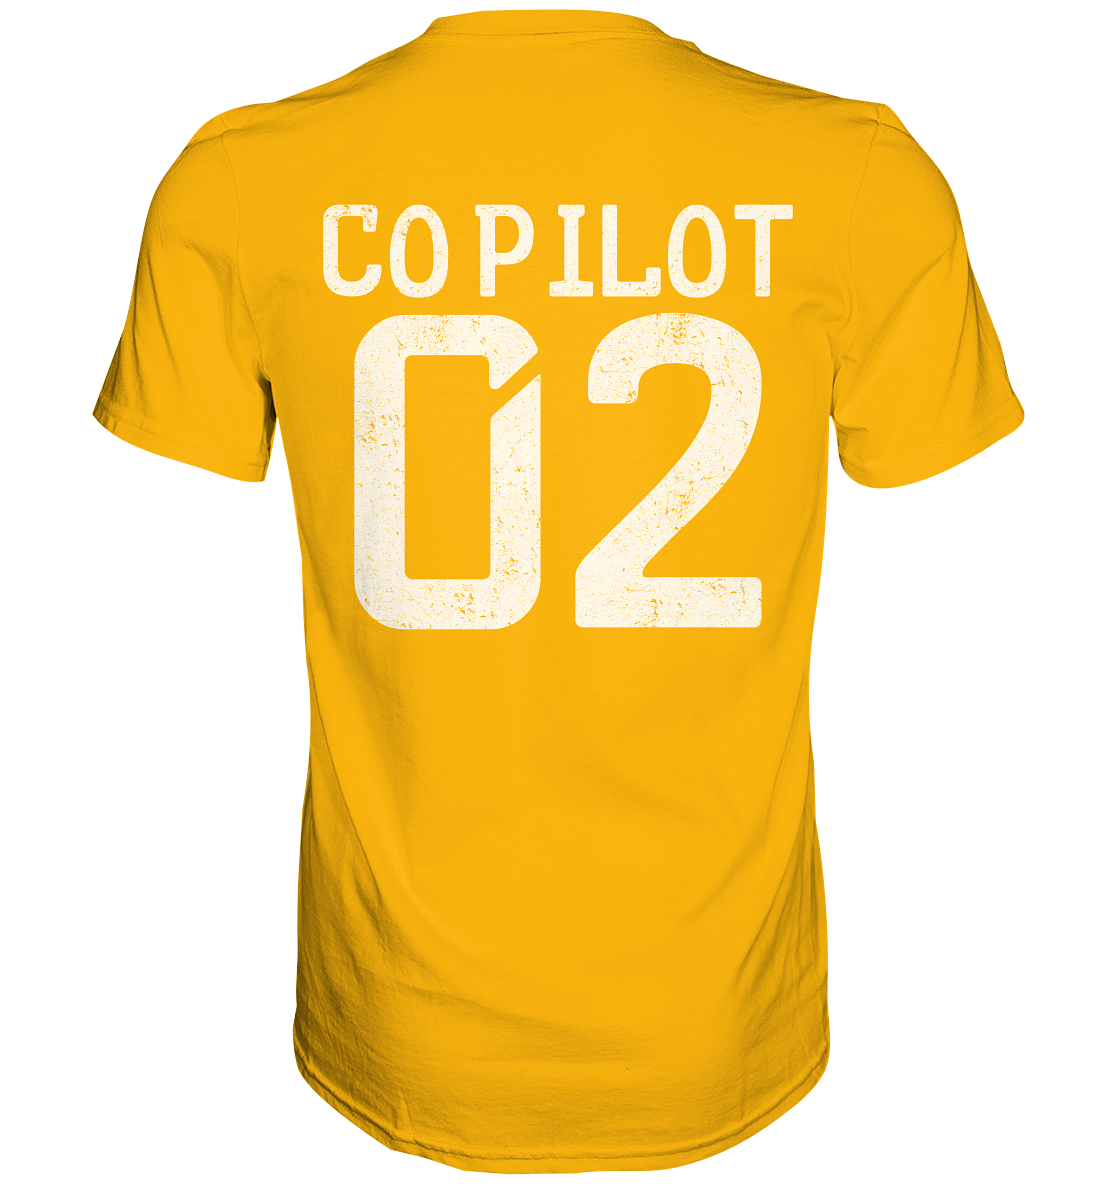 PS_Copilot02_men_w Organic Shirt